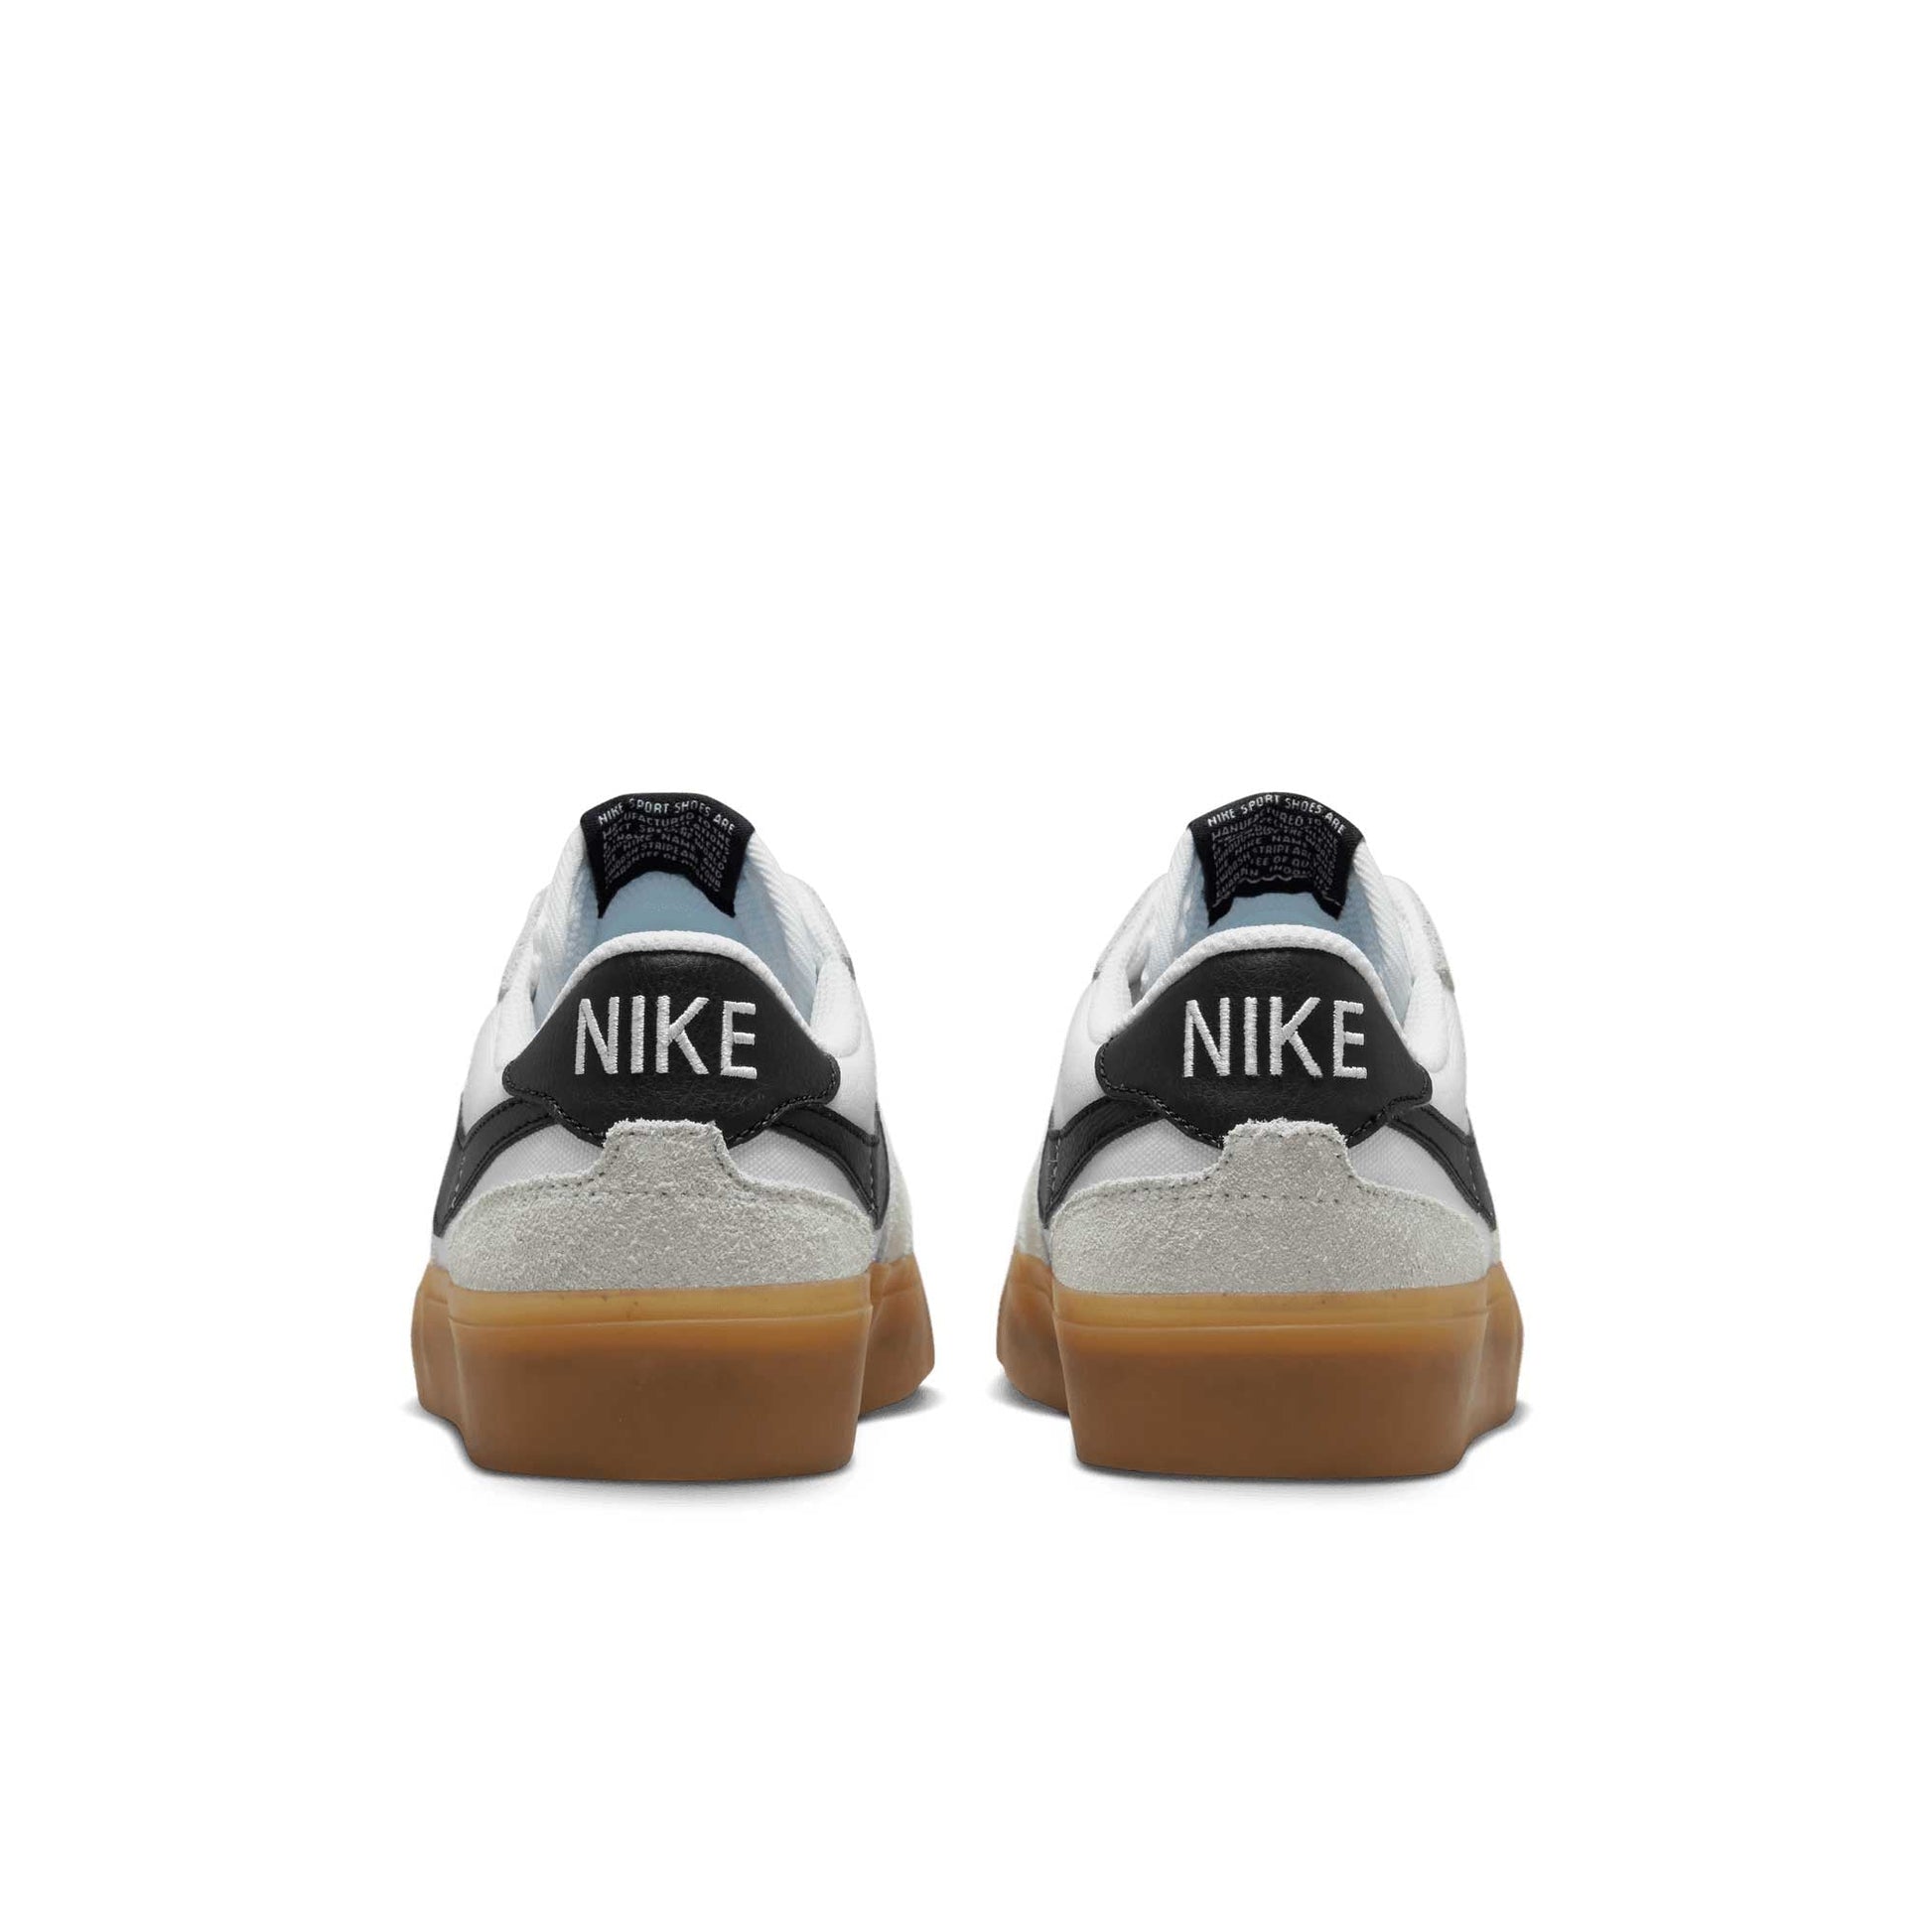 Nike SB Pogo, white/black-white-gum light brown - Tiki Room Skateboards - 7